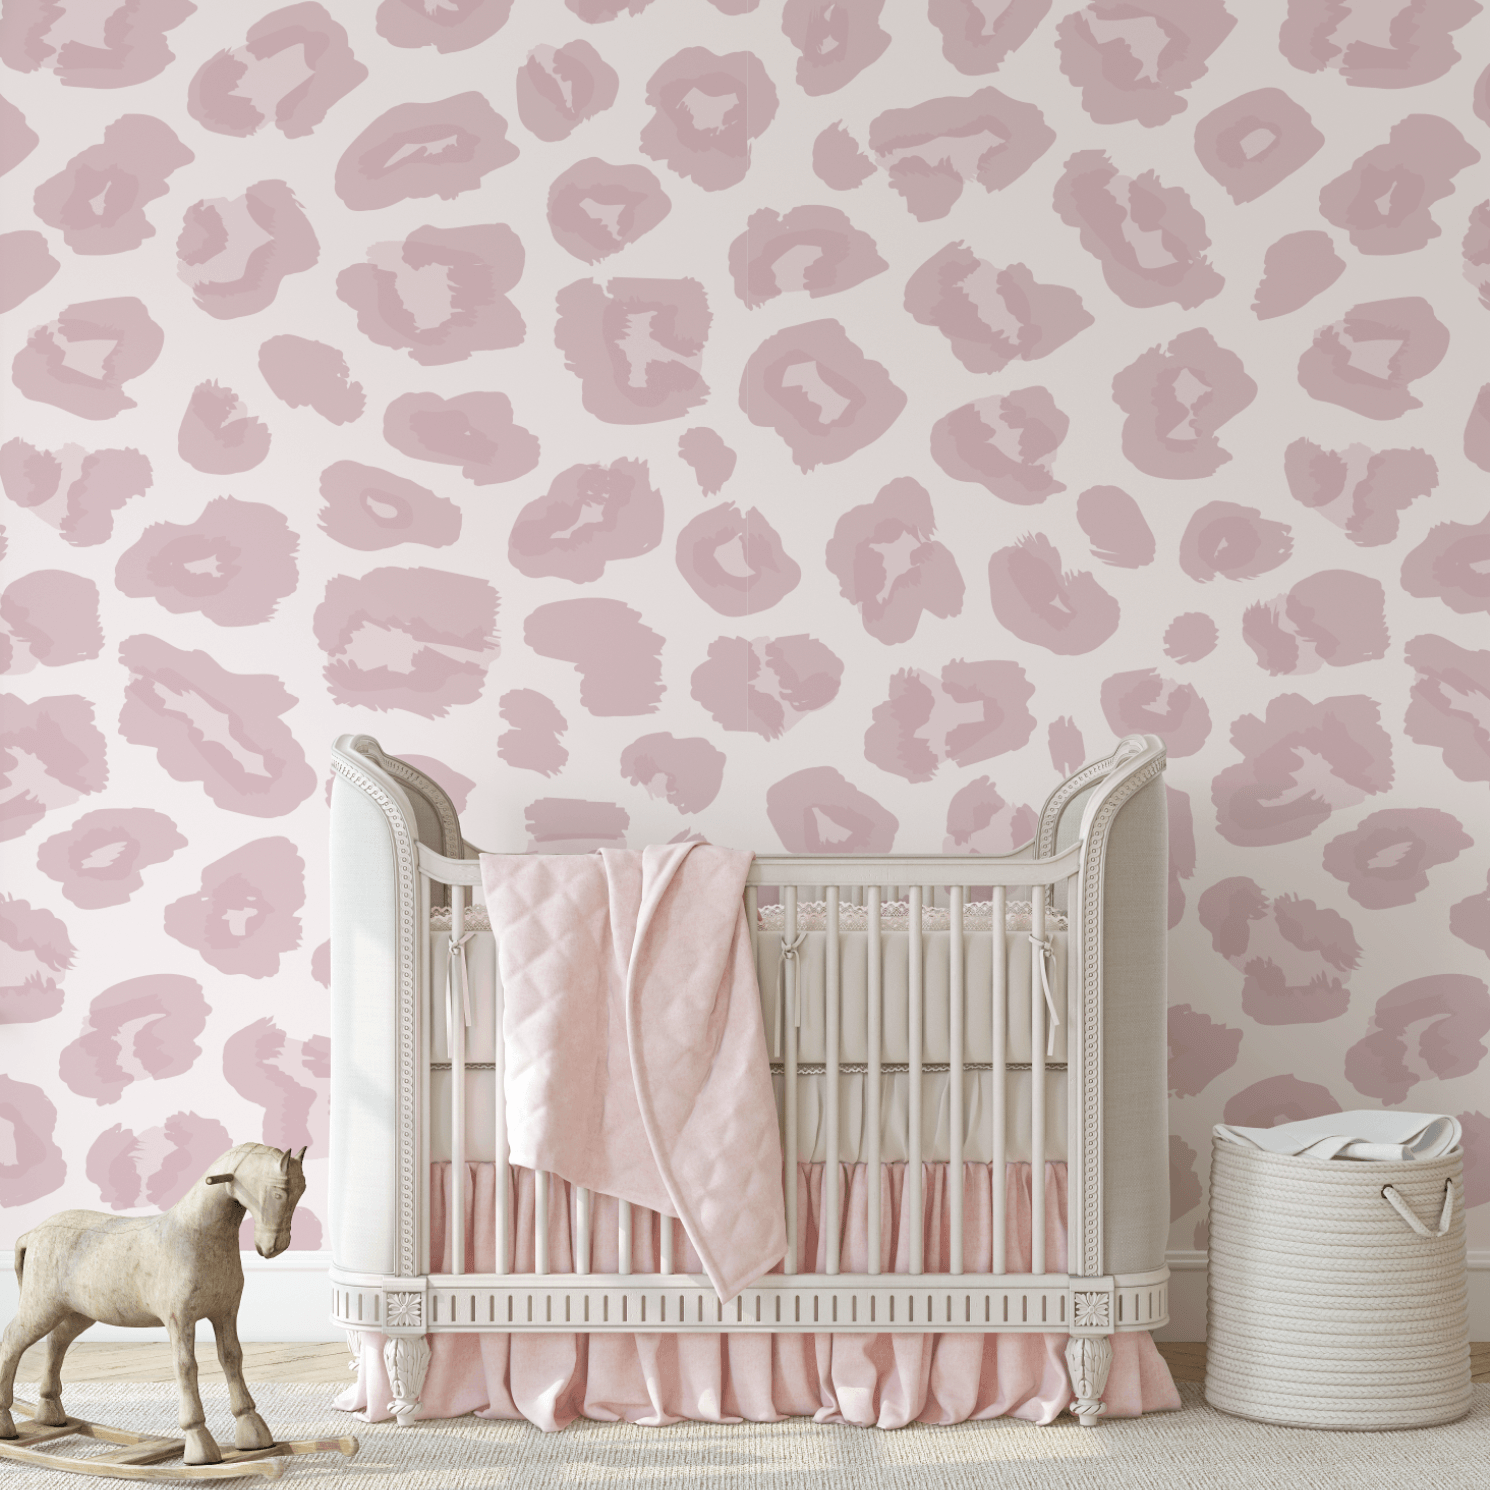 Soft Pink Animal Print Wallpaper. Removable Wallpaper Animal. Animal Peel and stick Wallpaper. Animal Print Wallpaper